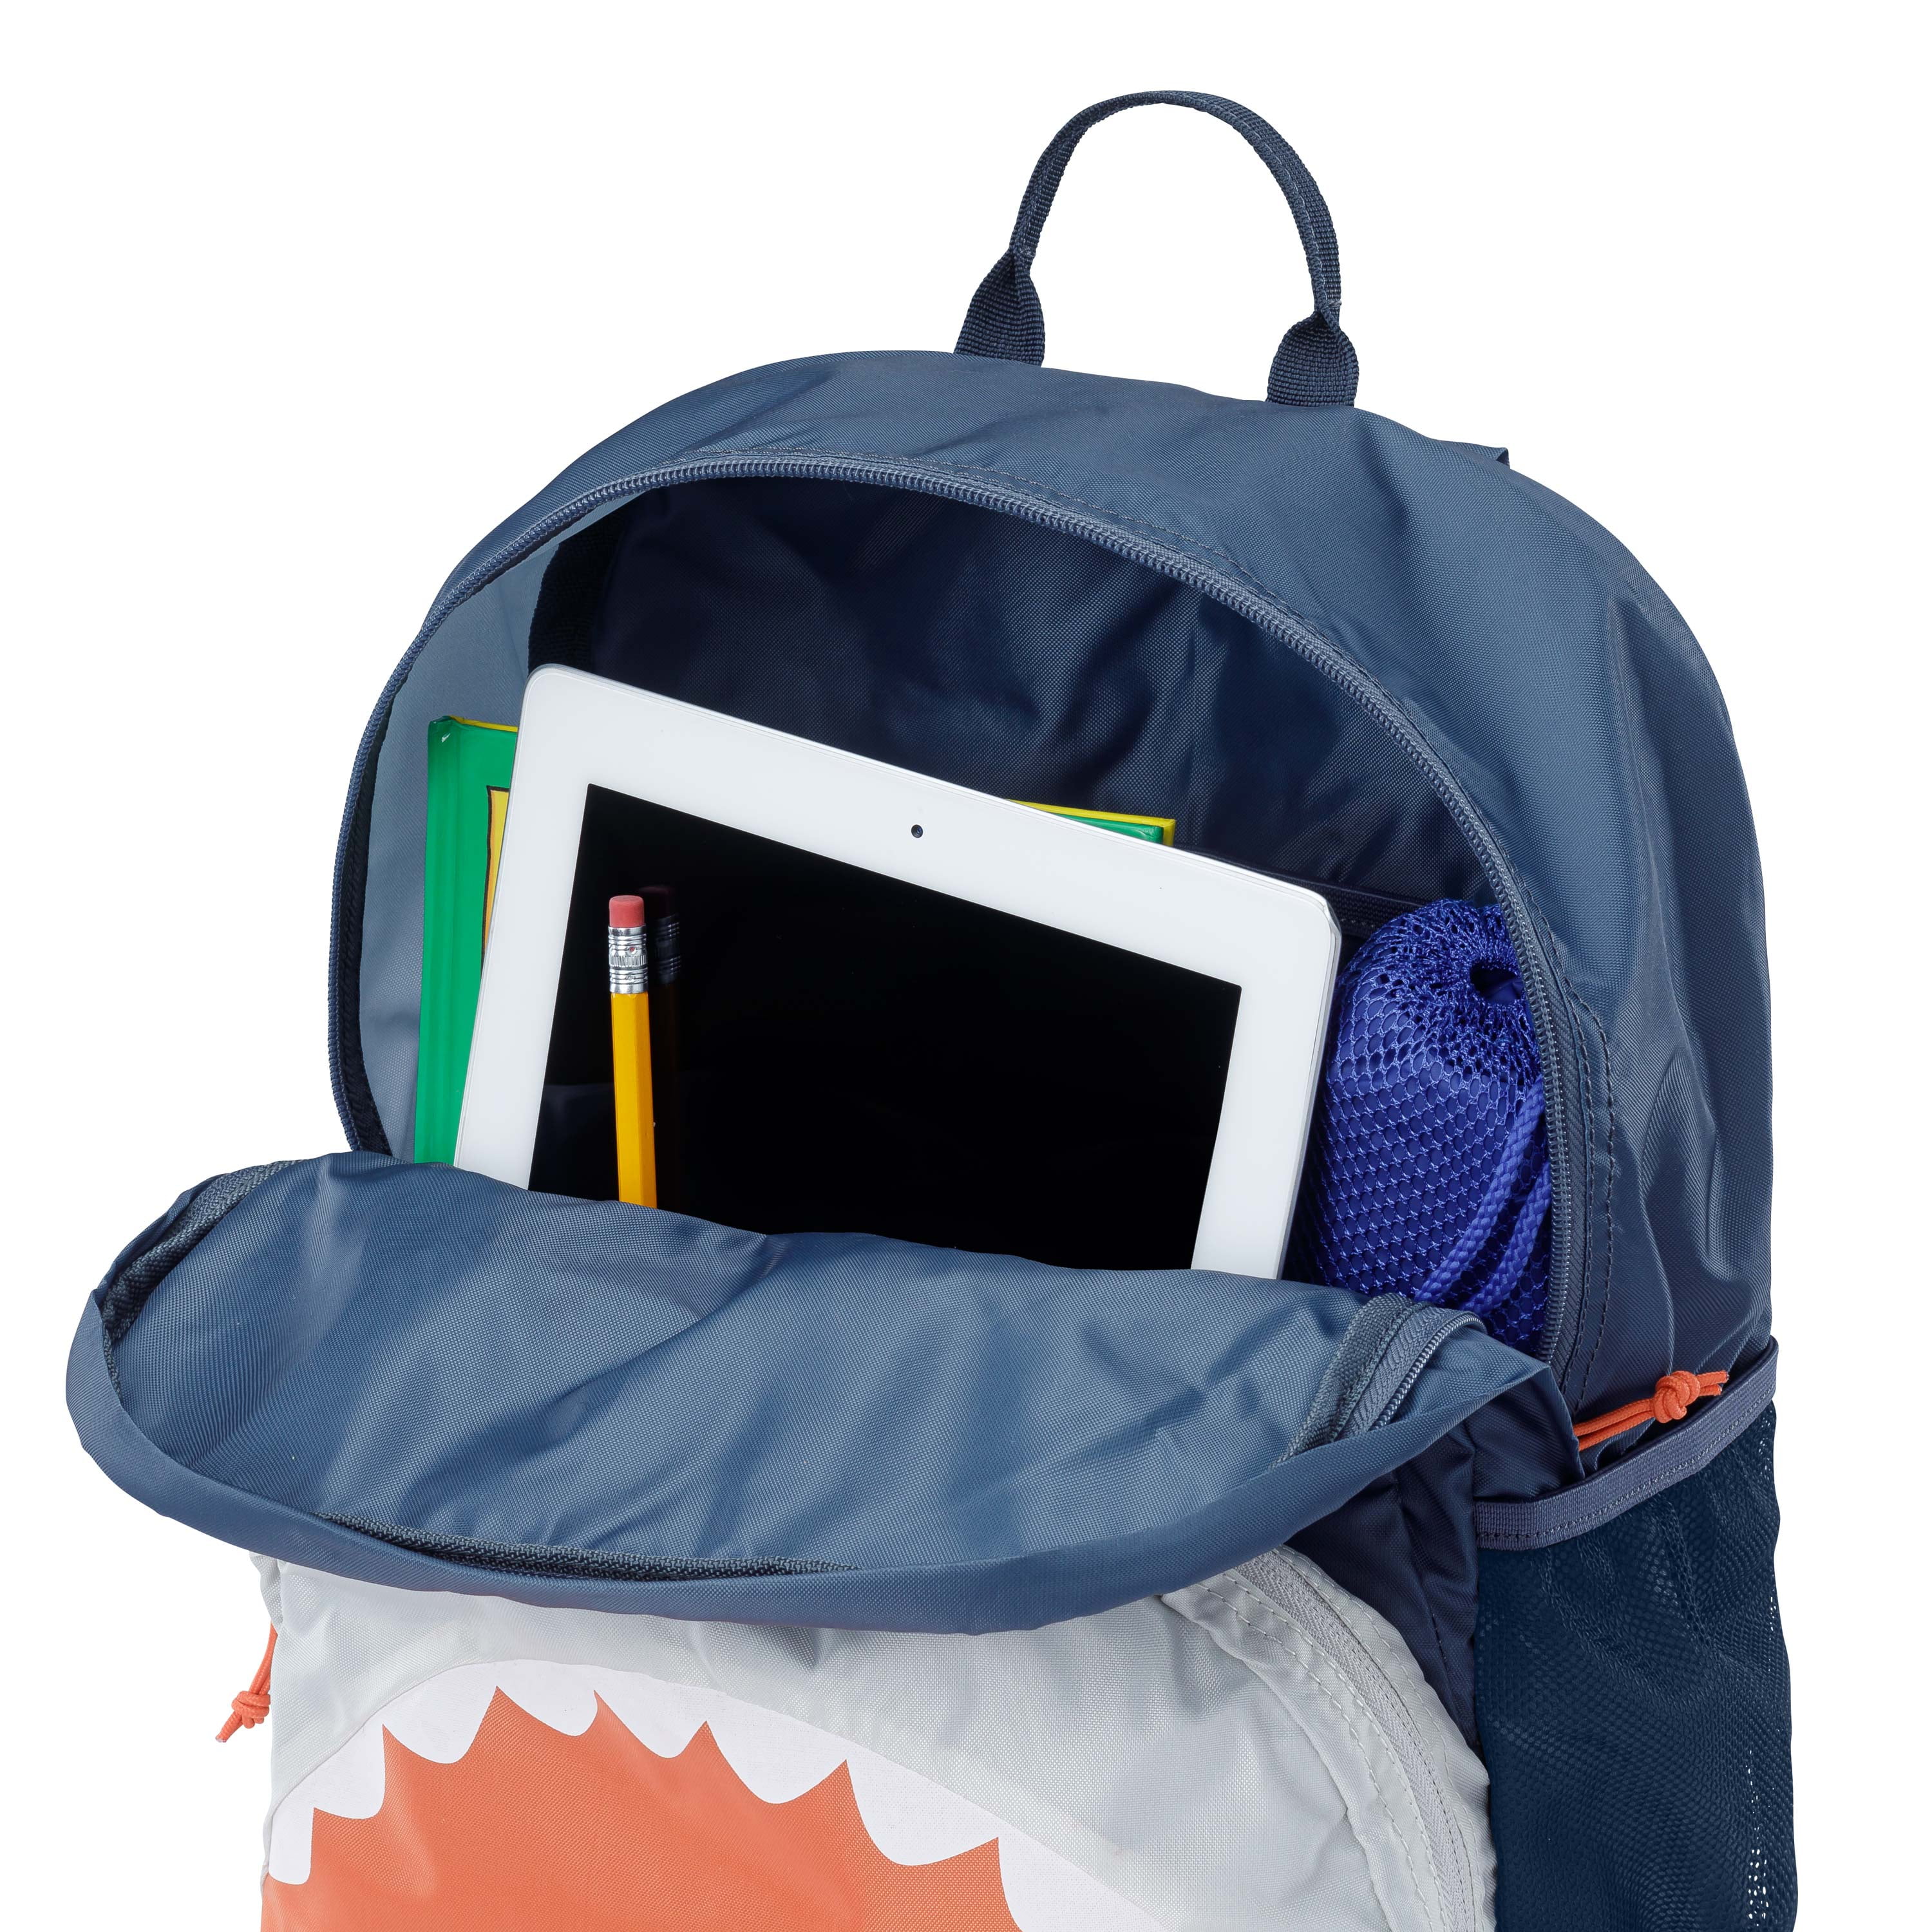 Kids Backpack by Forward- Black – Saturn Shoppe